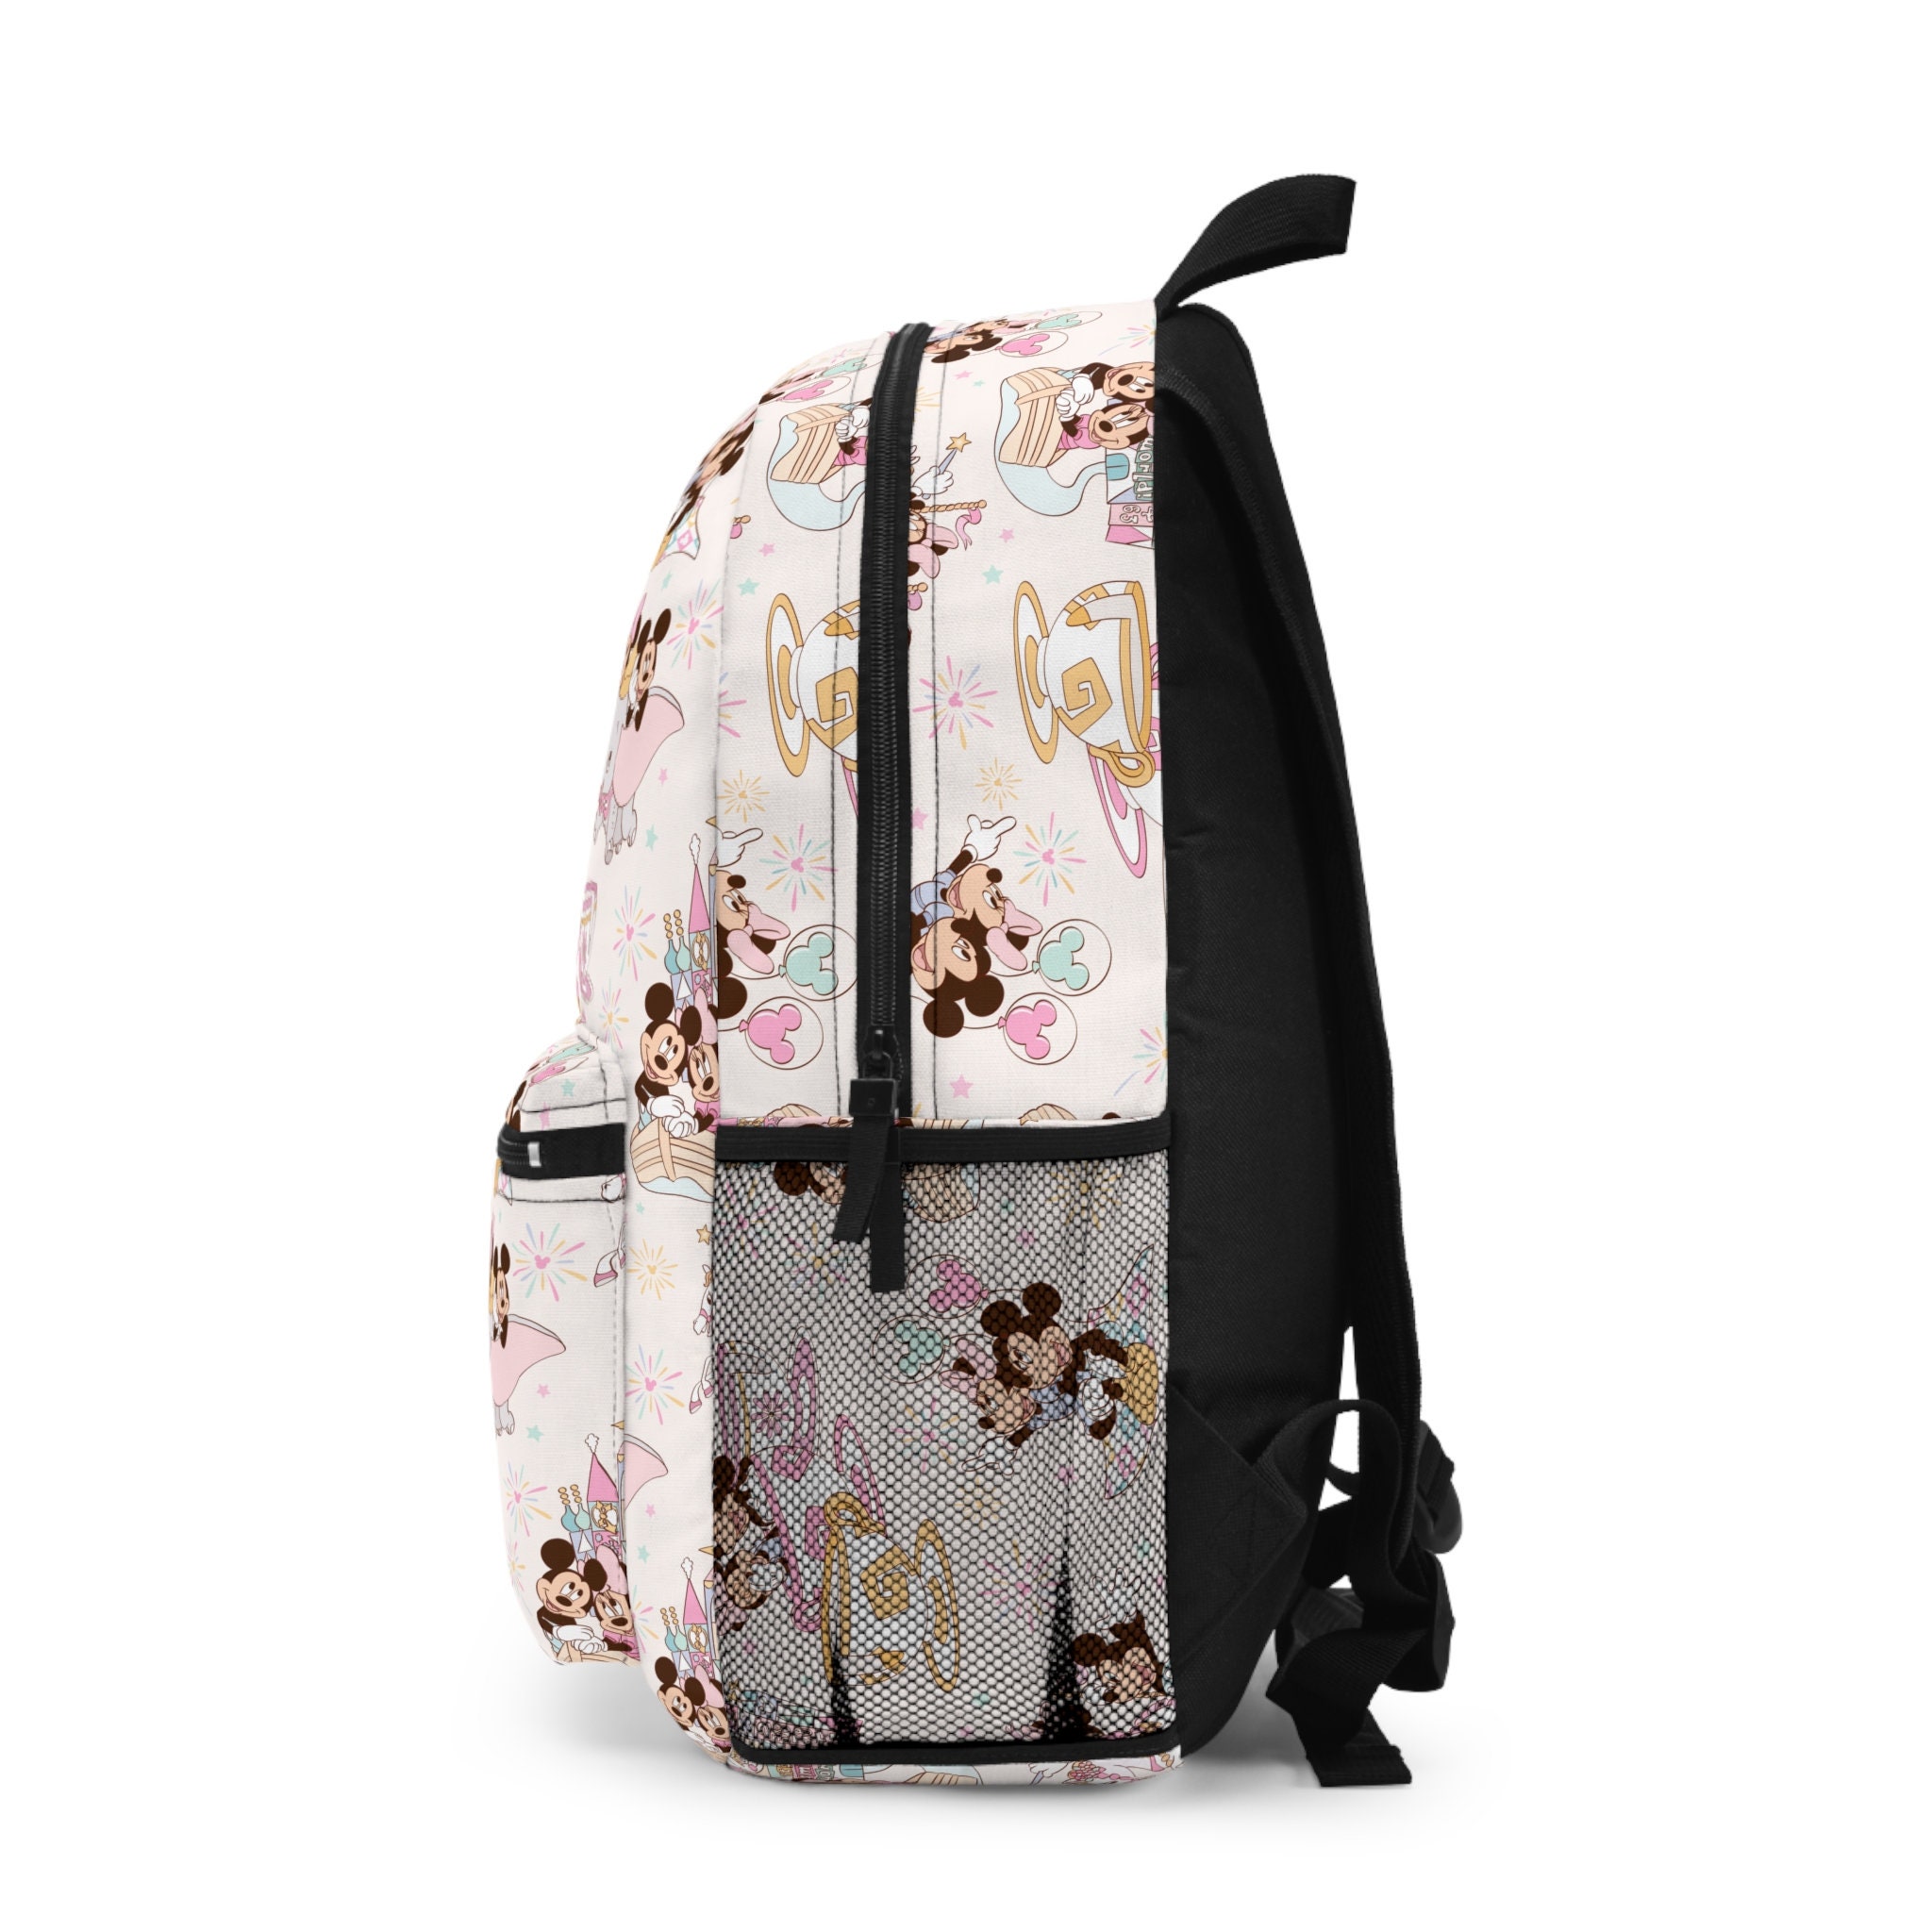 Mickey Minnie Pattern, Back to School, Disney Trip Accessory Personalized School Backpack